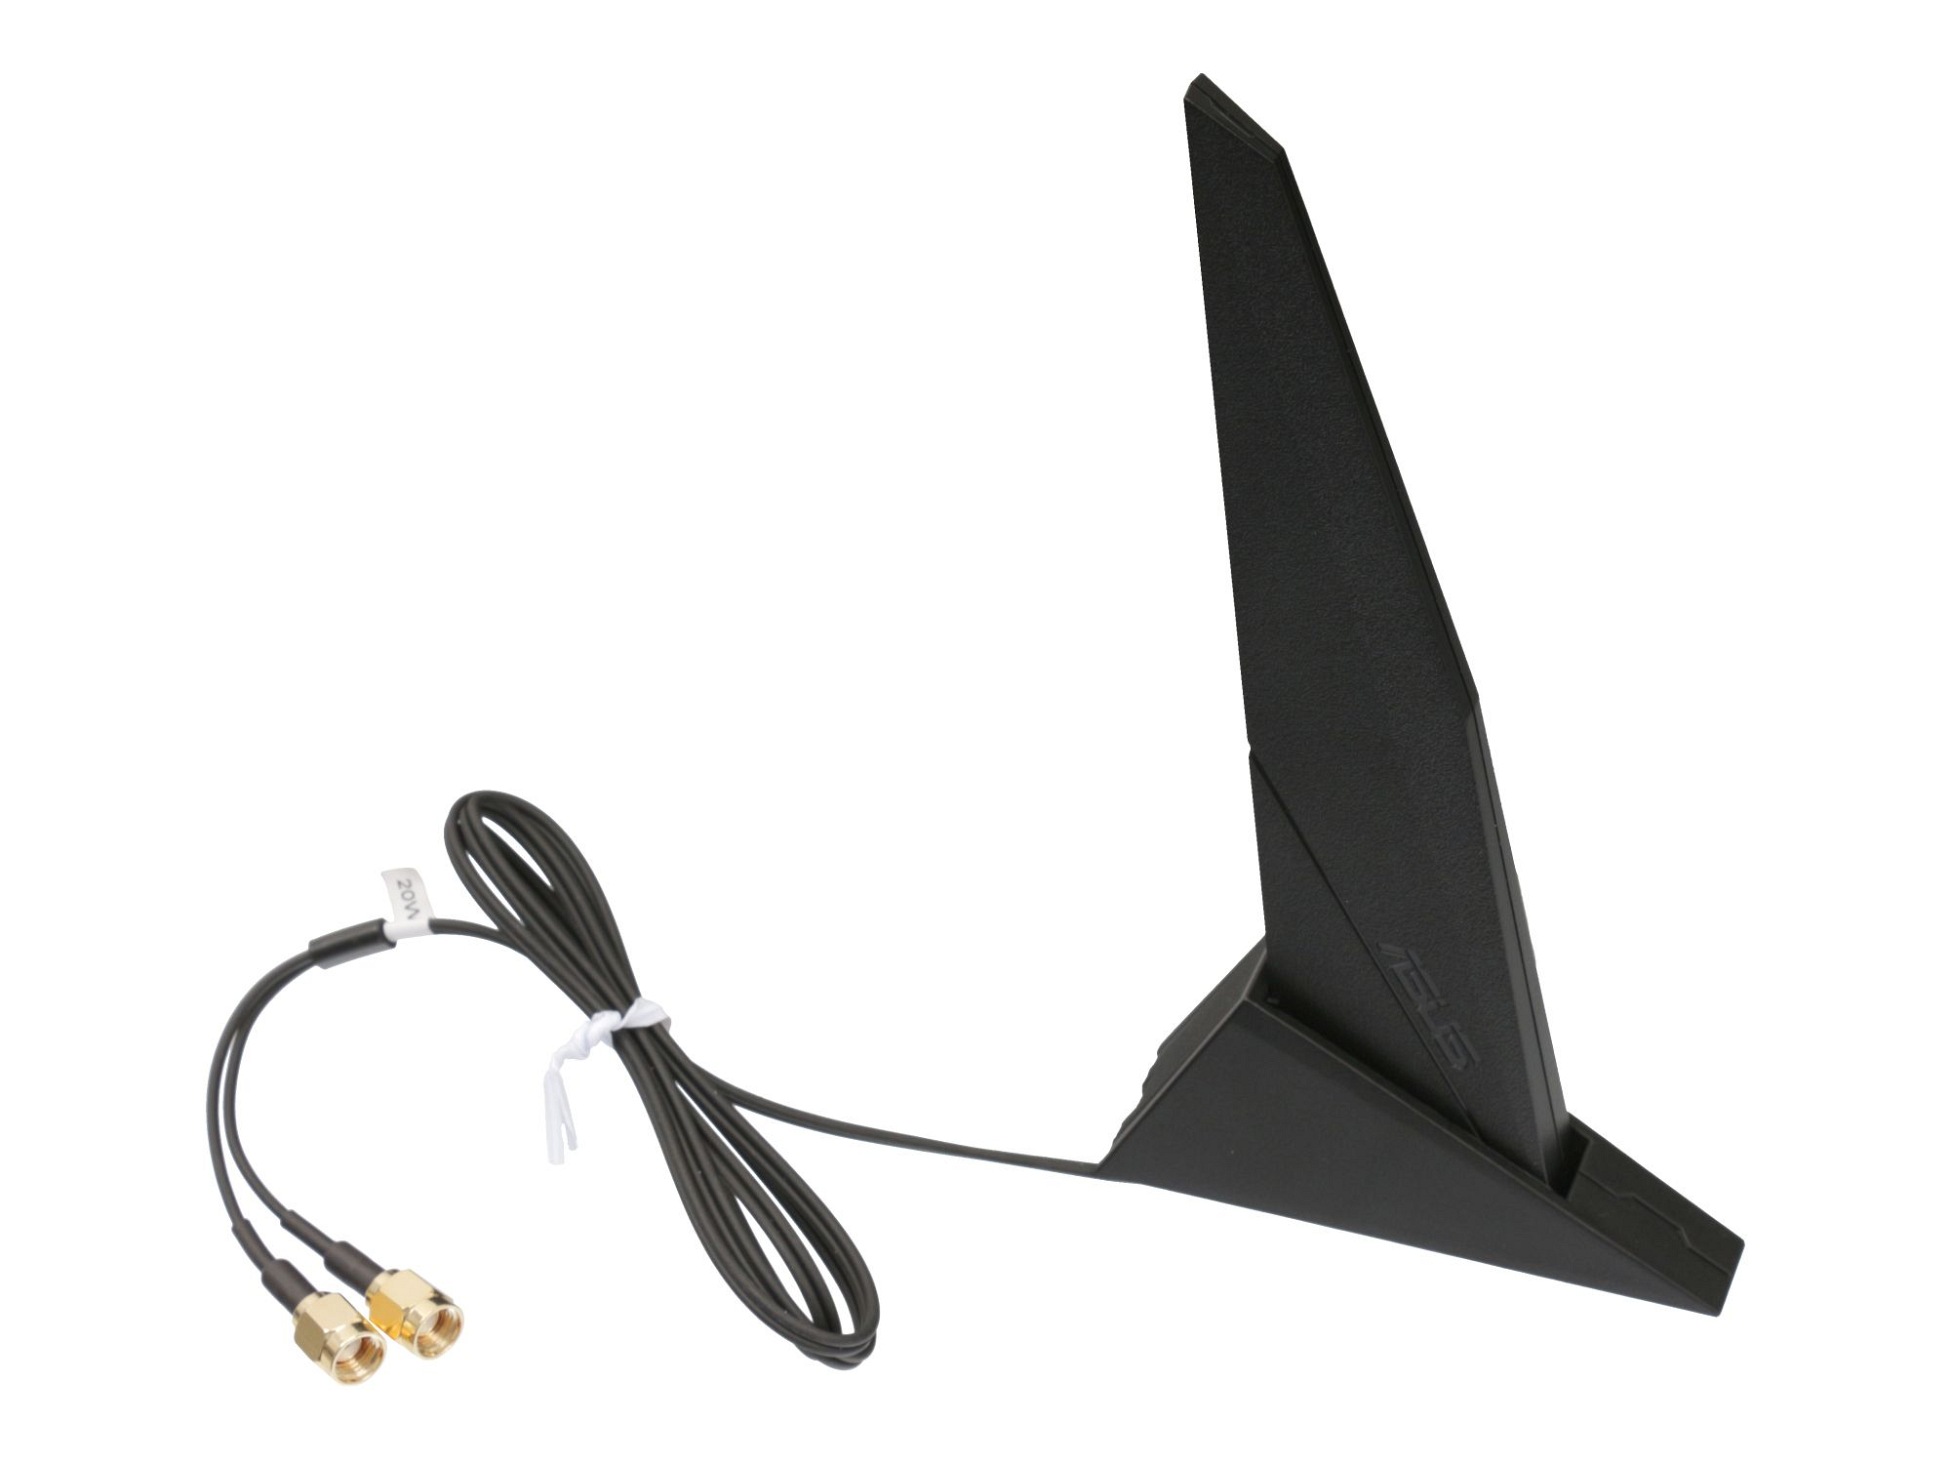 Externe Asus RP-SMA DIPOLE Antenne für Asus TUF GAMING B460M-PLUS